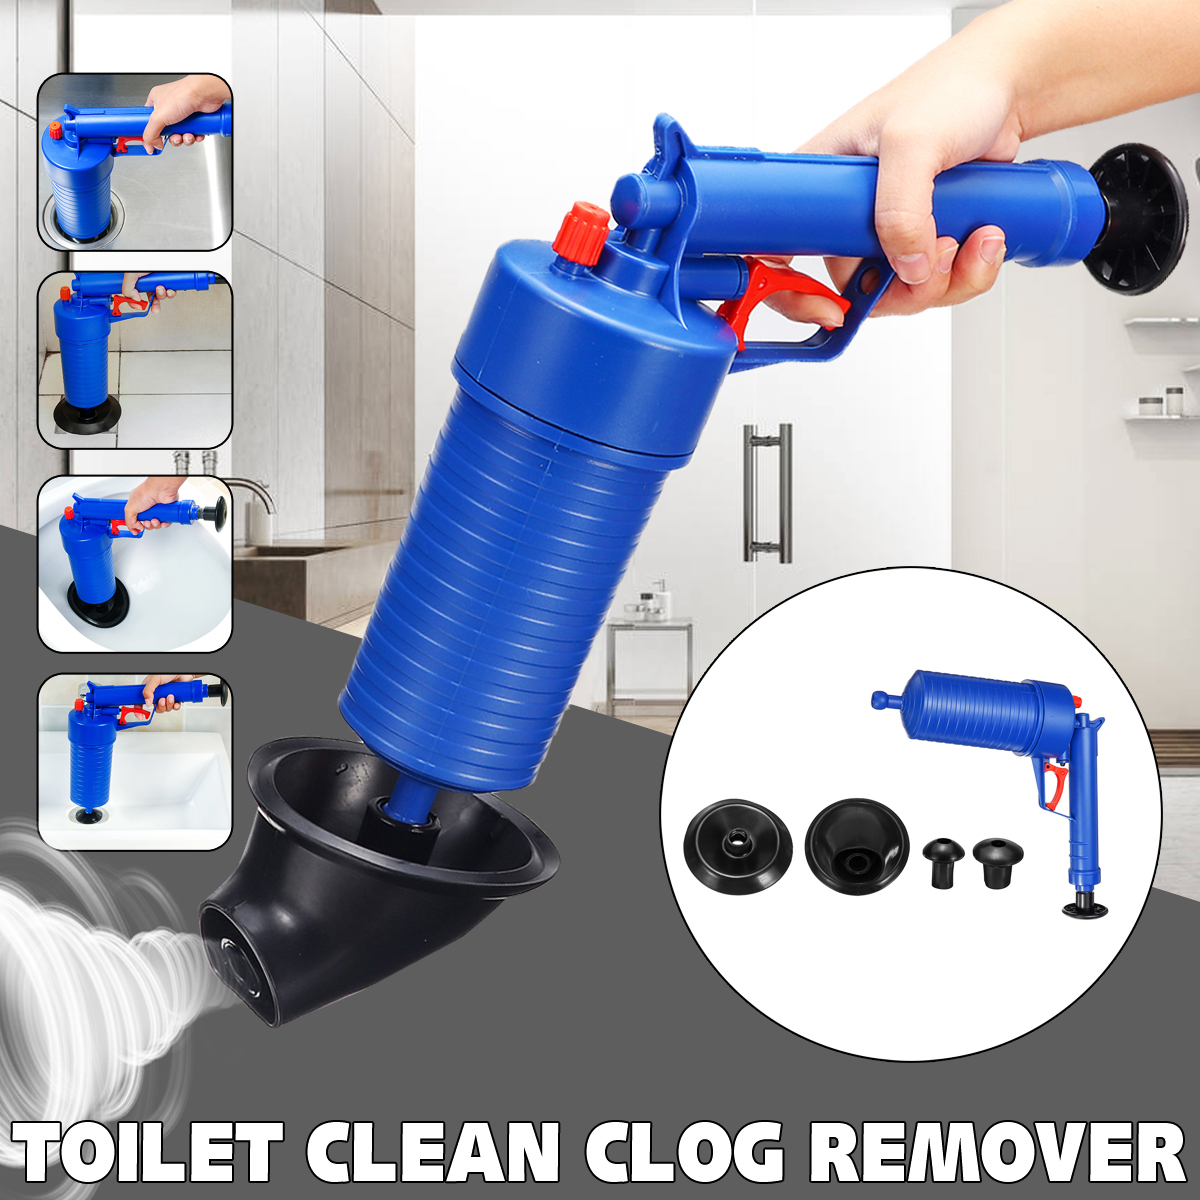 Air-Pump-Drain-Sink-Plunger-Bathroom-Toilet-Sewer-Blockage-Remover-Unblocker-1568102-1